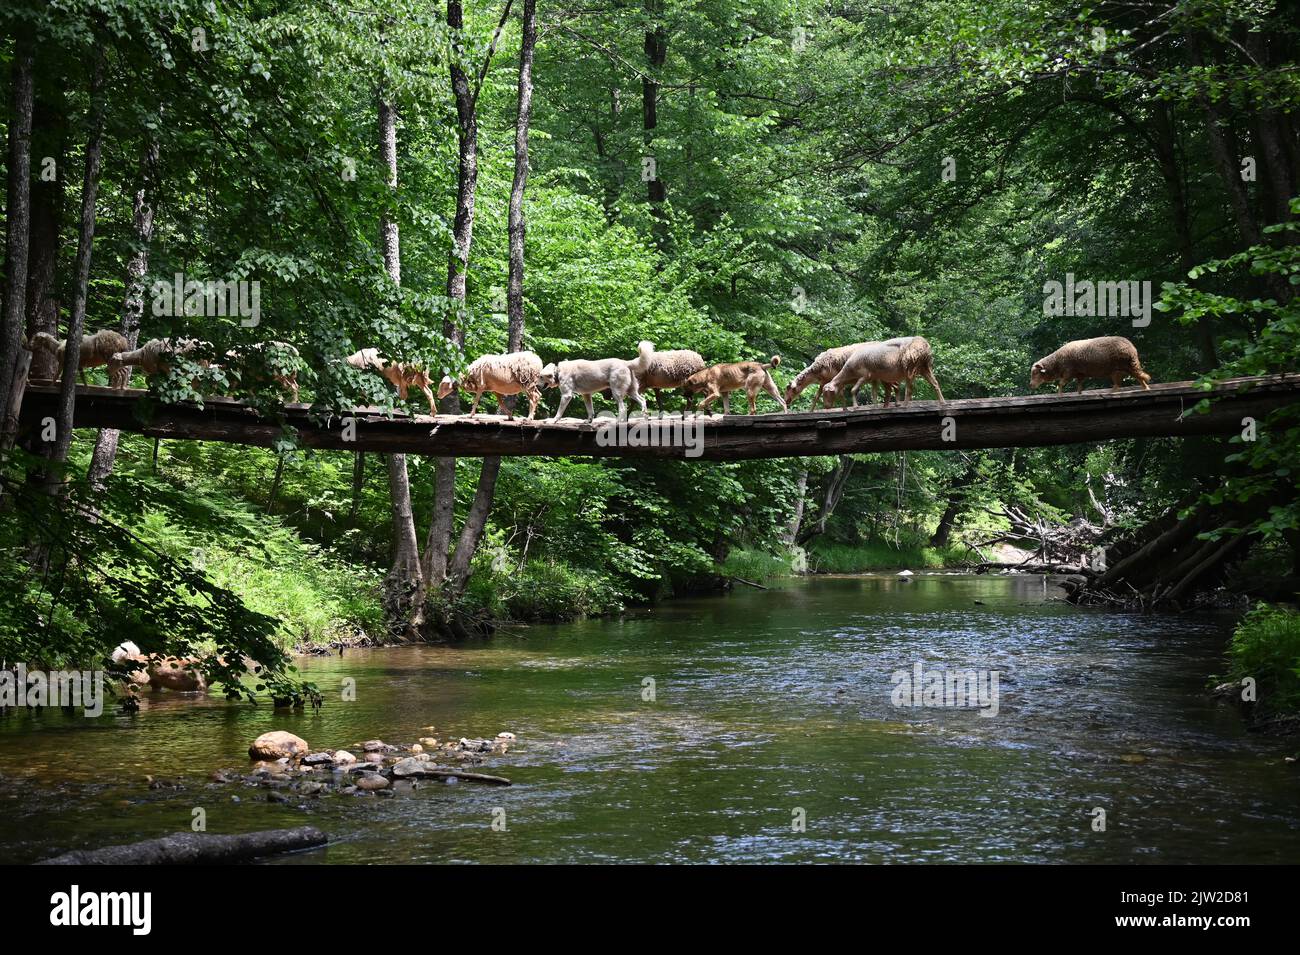 Flock of sheep crossing the river by an old bridge. Kirklareli city. Floodplain forest. Turkey. Sheeps crossing the wooden bridge Stock Photo